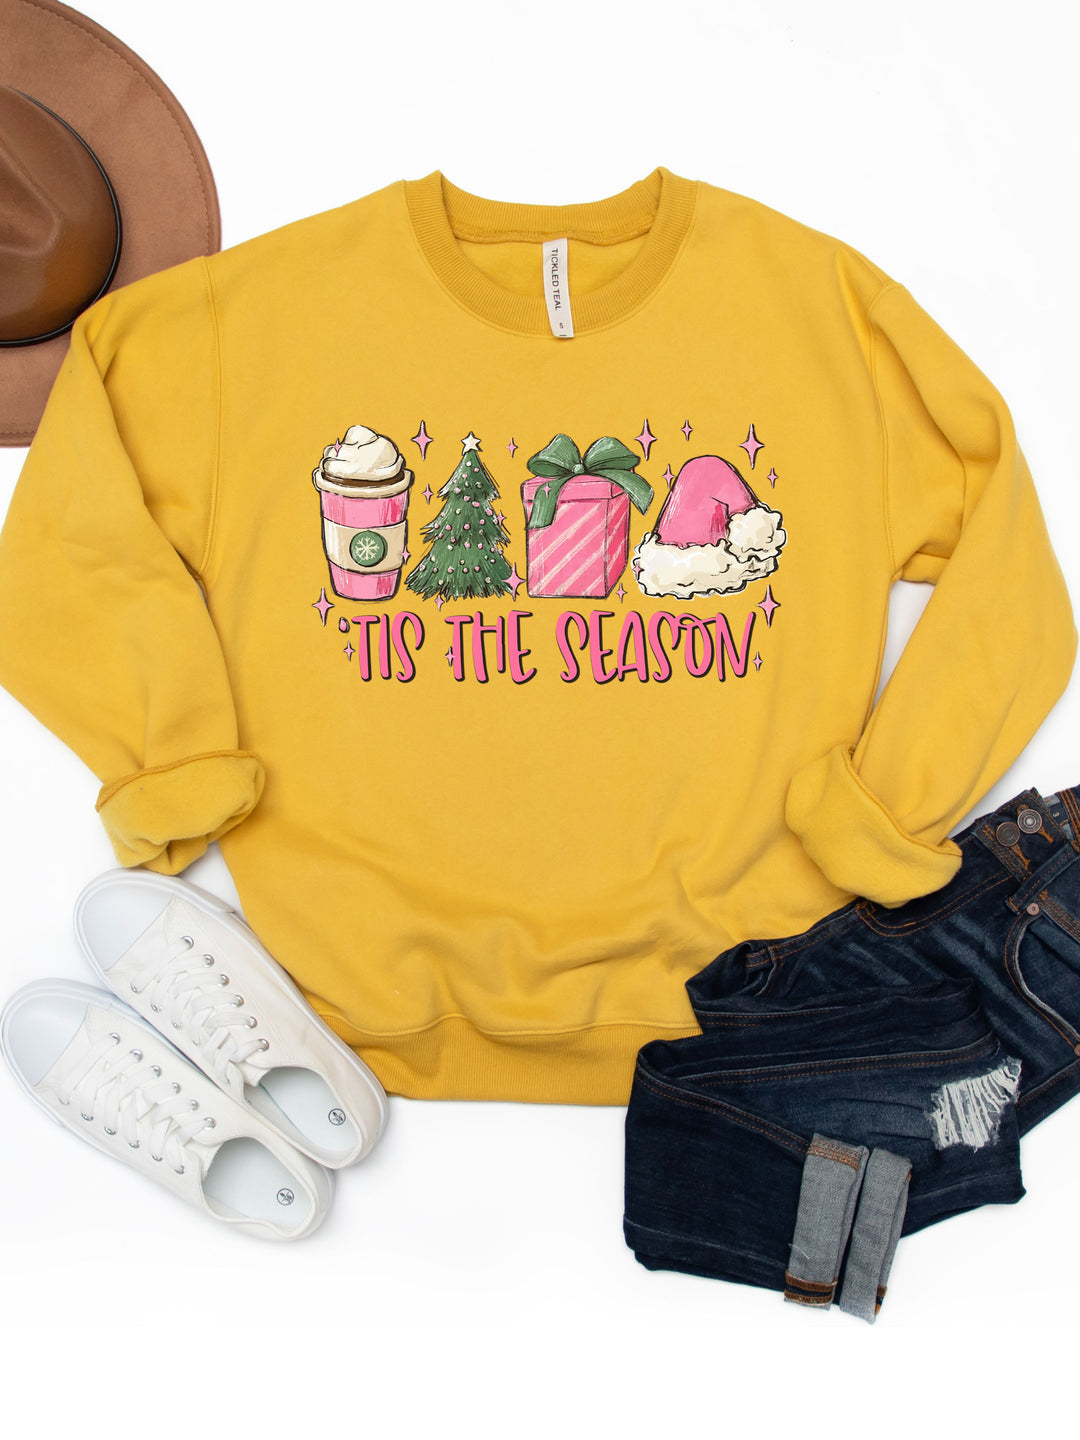 Tis The Season Pink - Christmas Graphic Sweatshirt